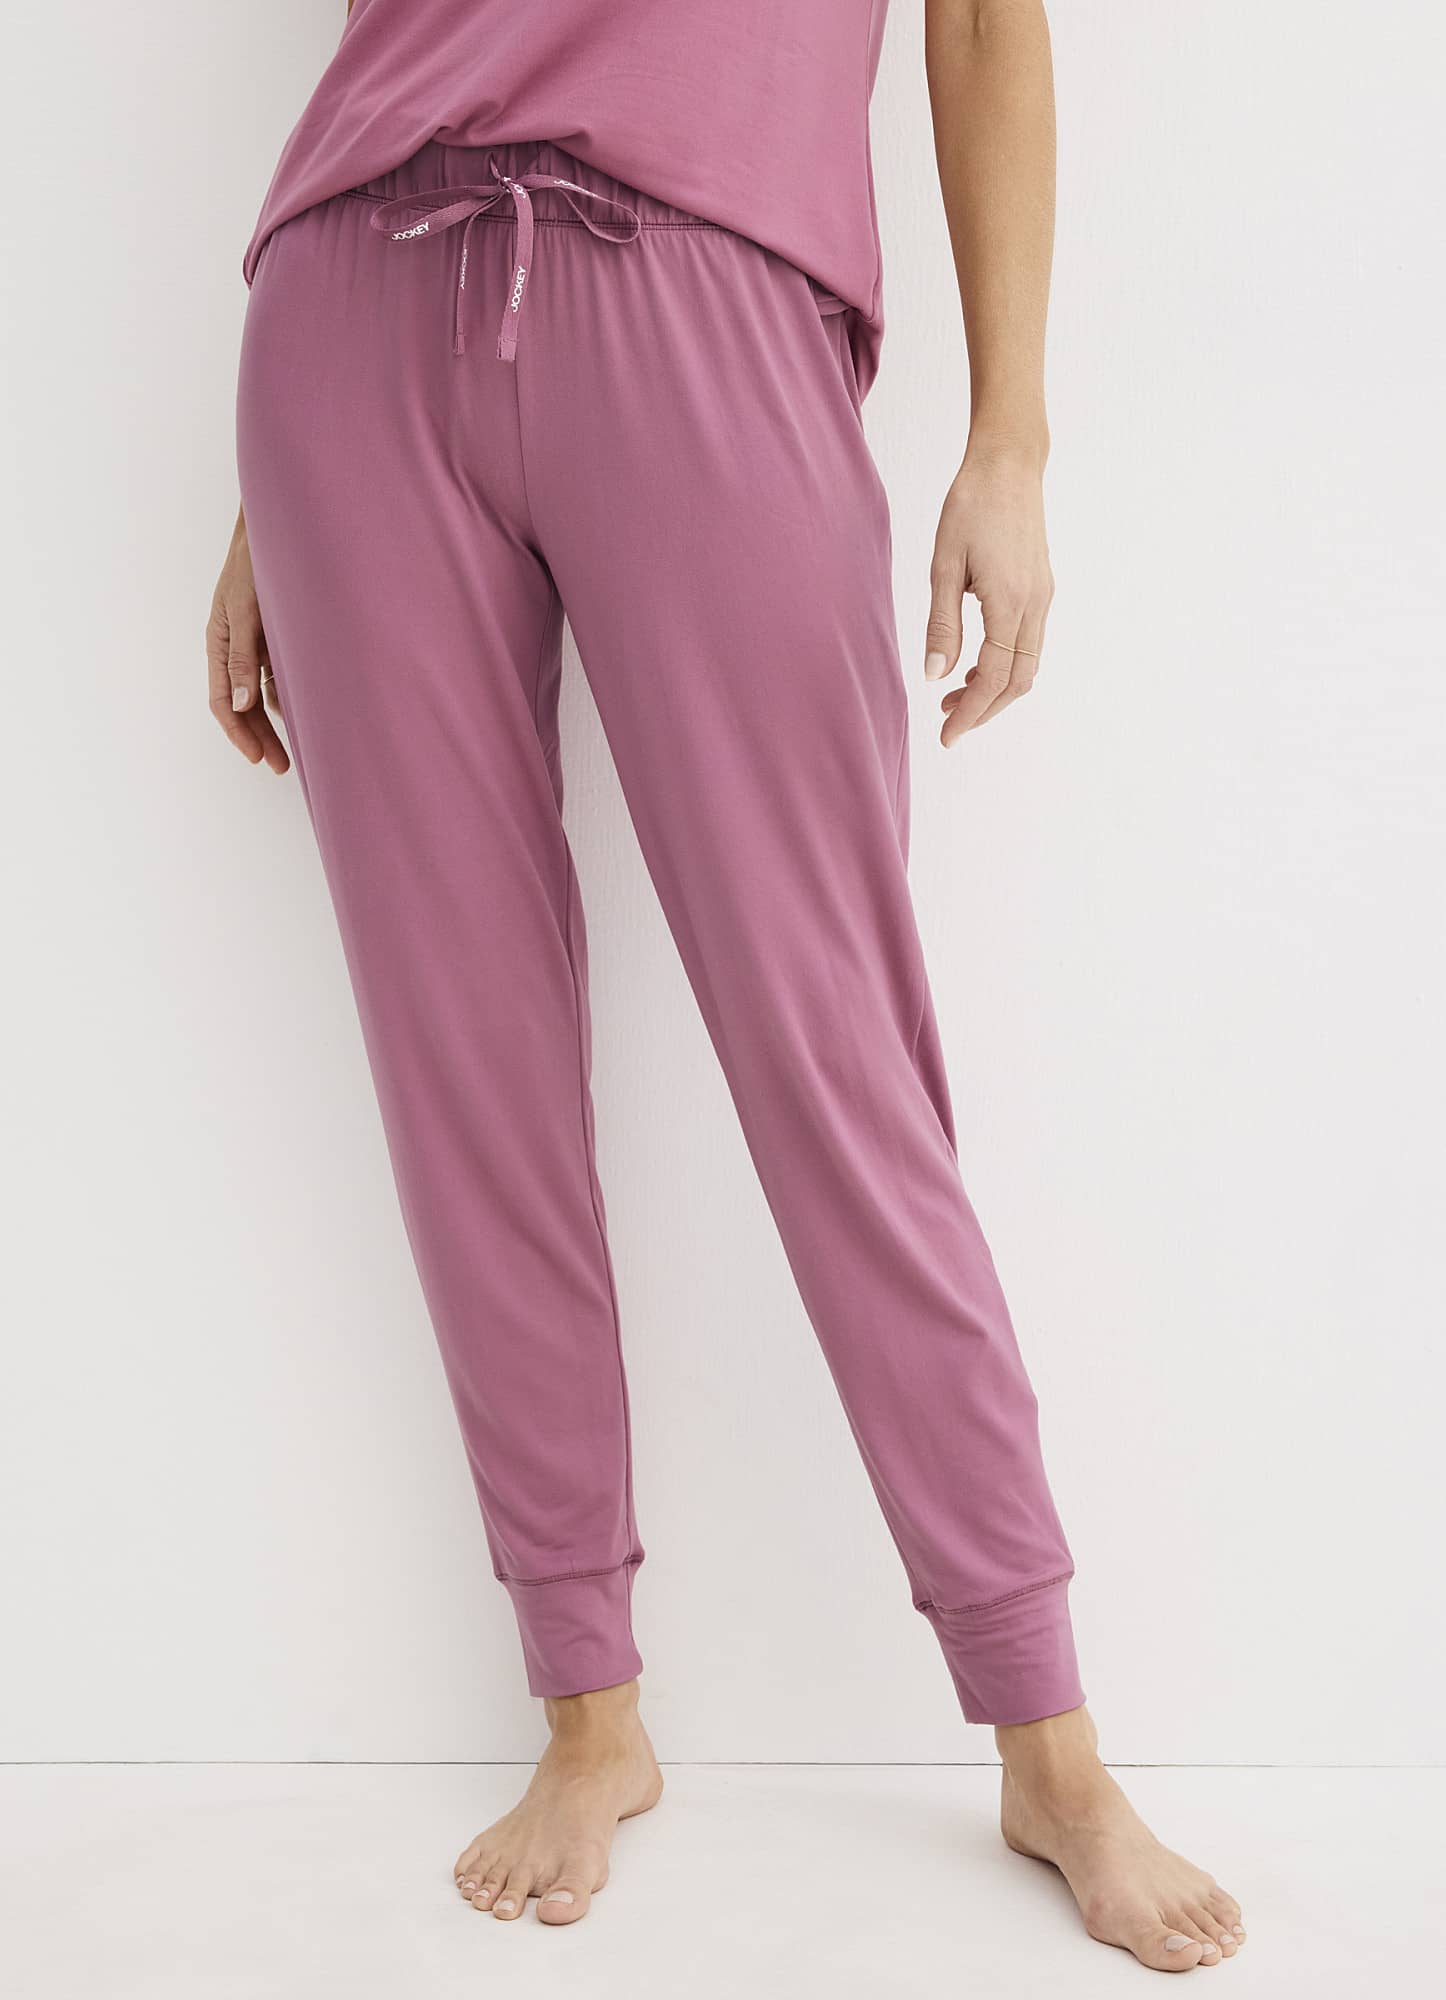 Buy Jockey Stretch Capri Pants - Grey at Rs.849 online | Activewear online